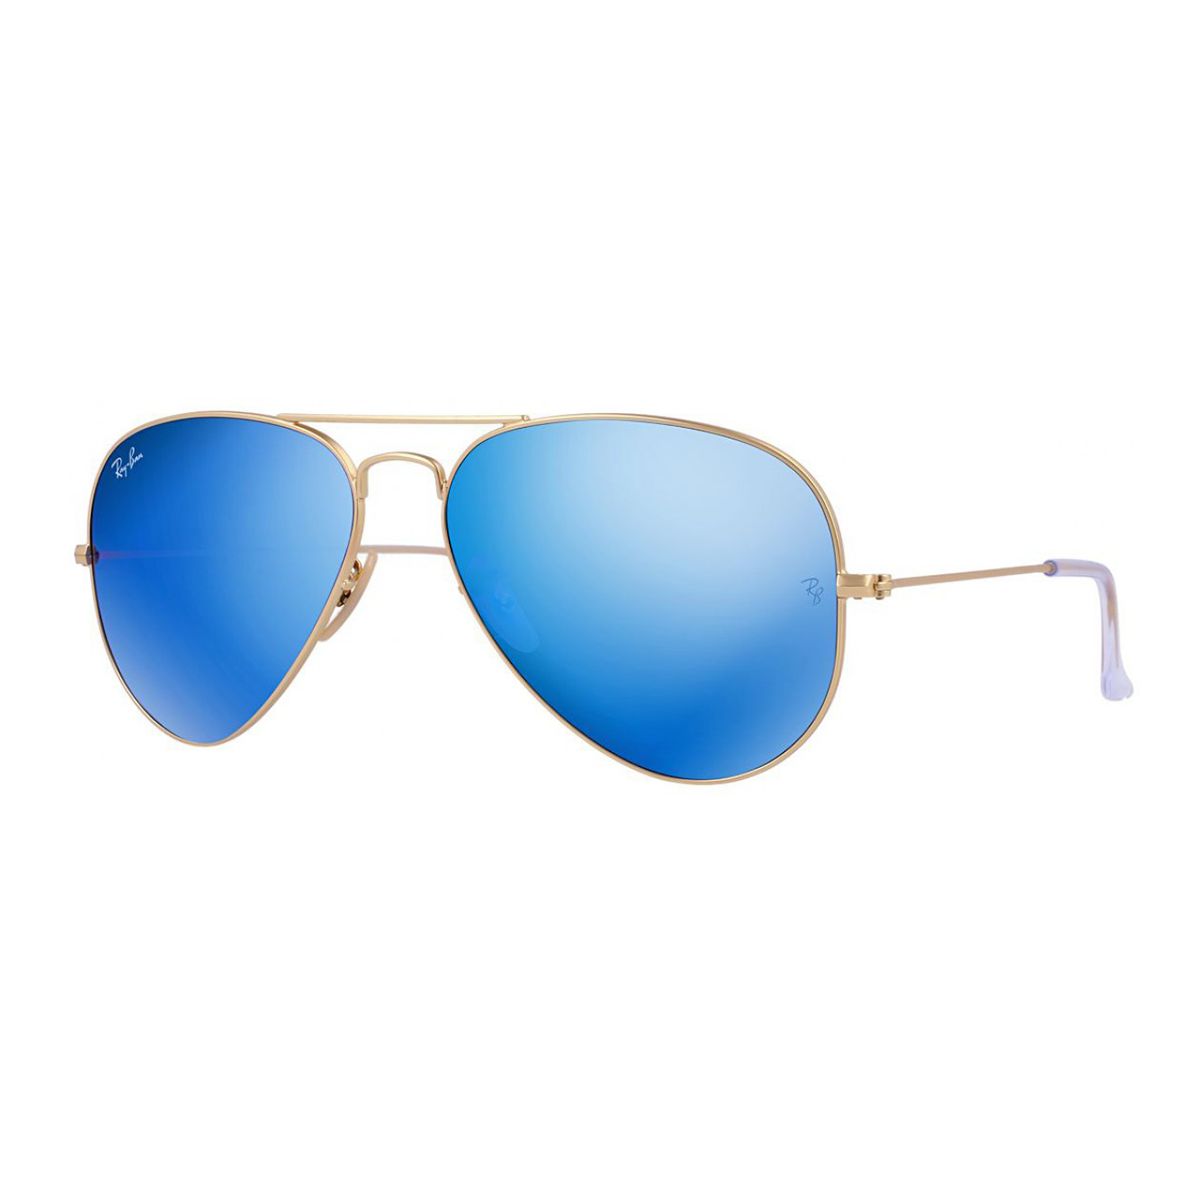 Image of Ray-Ban Aviator Blue Flash Sunglasses